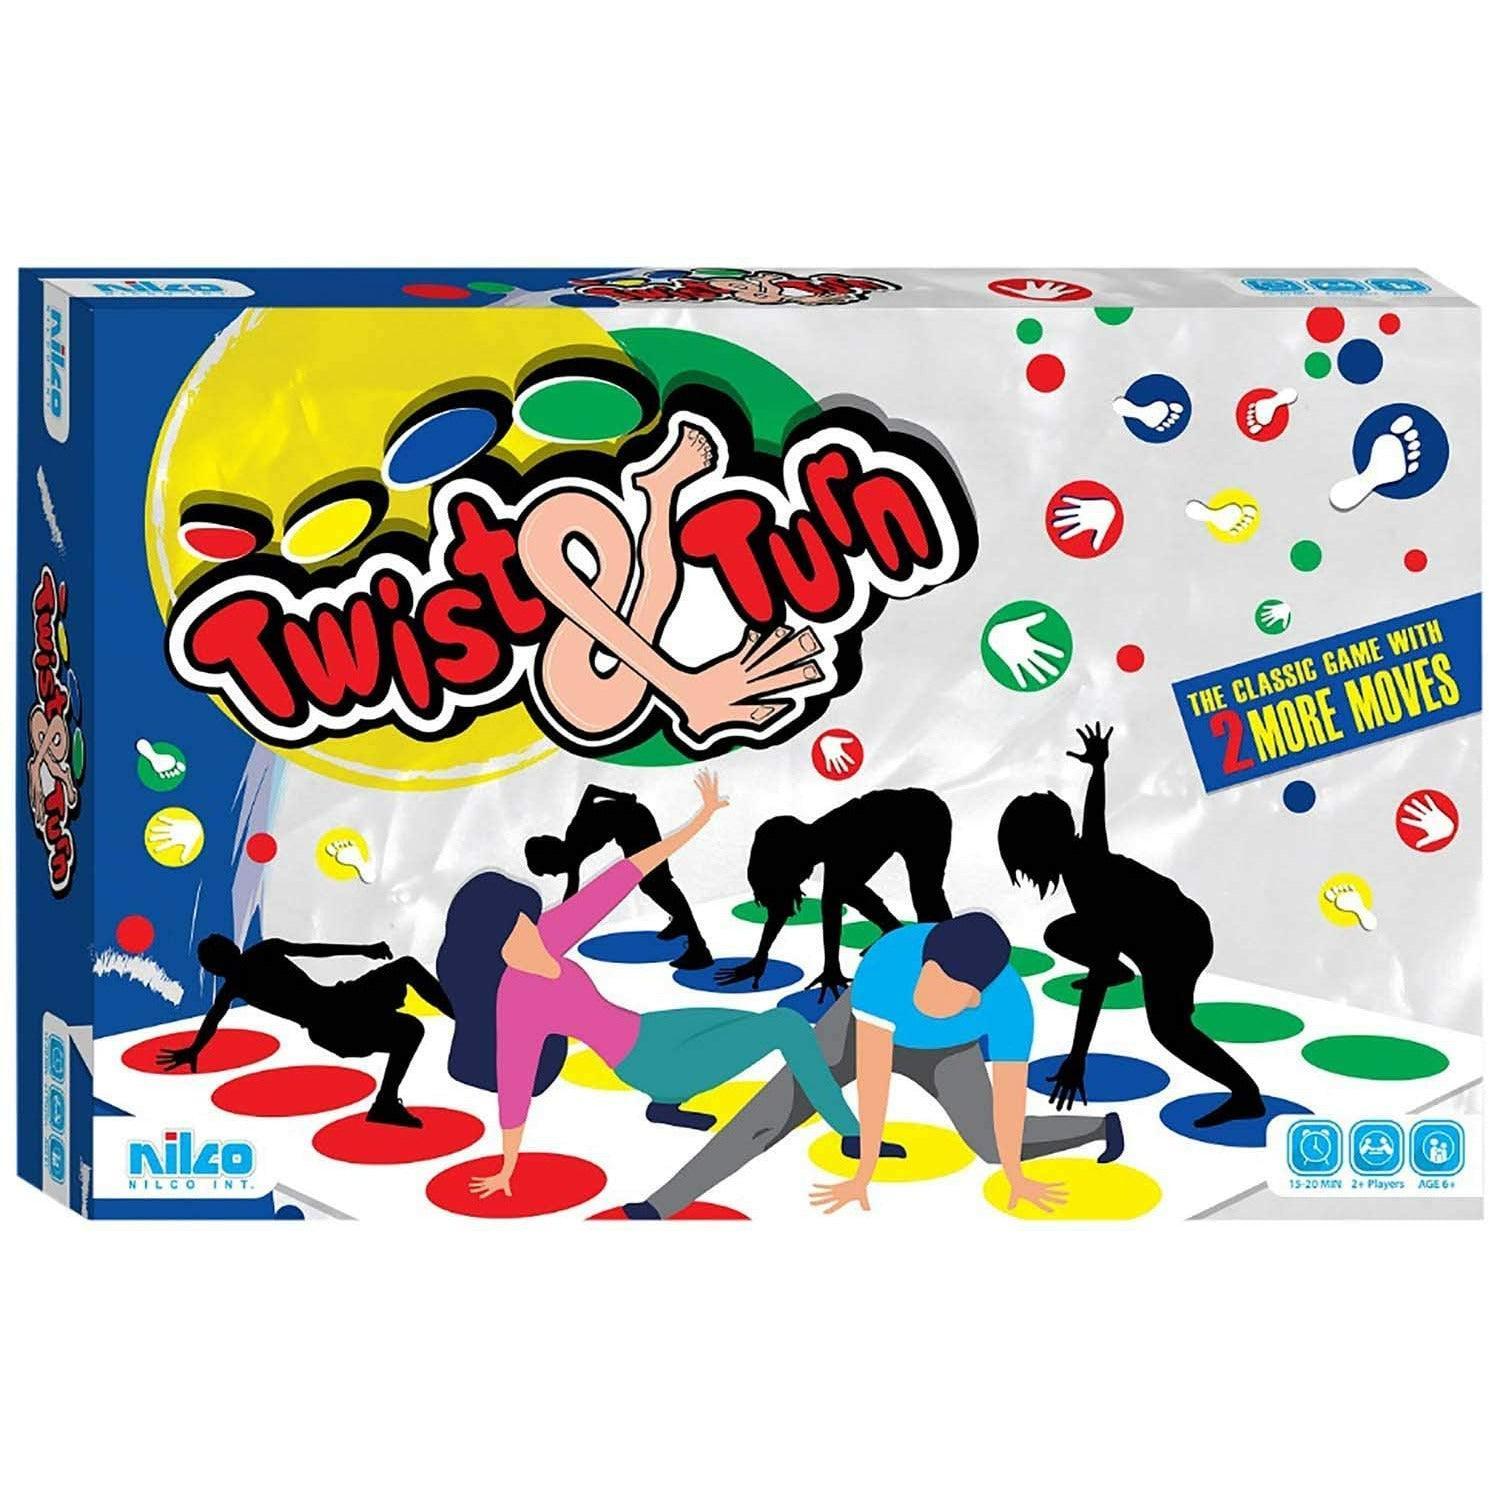 Nilco Classic Twister Game - Ourkids - Nilco